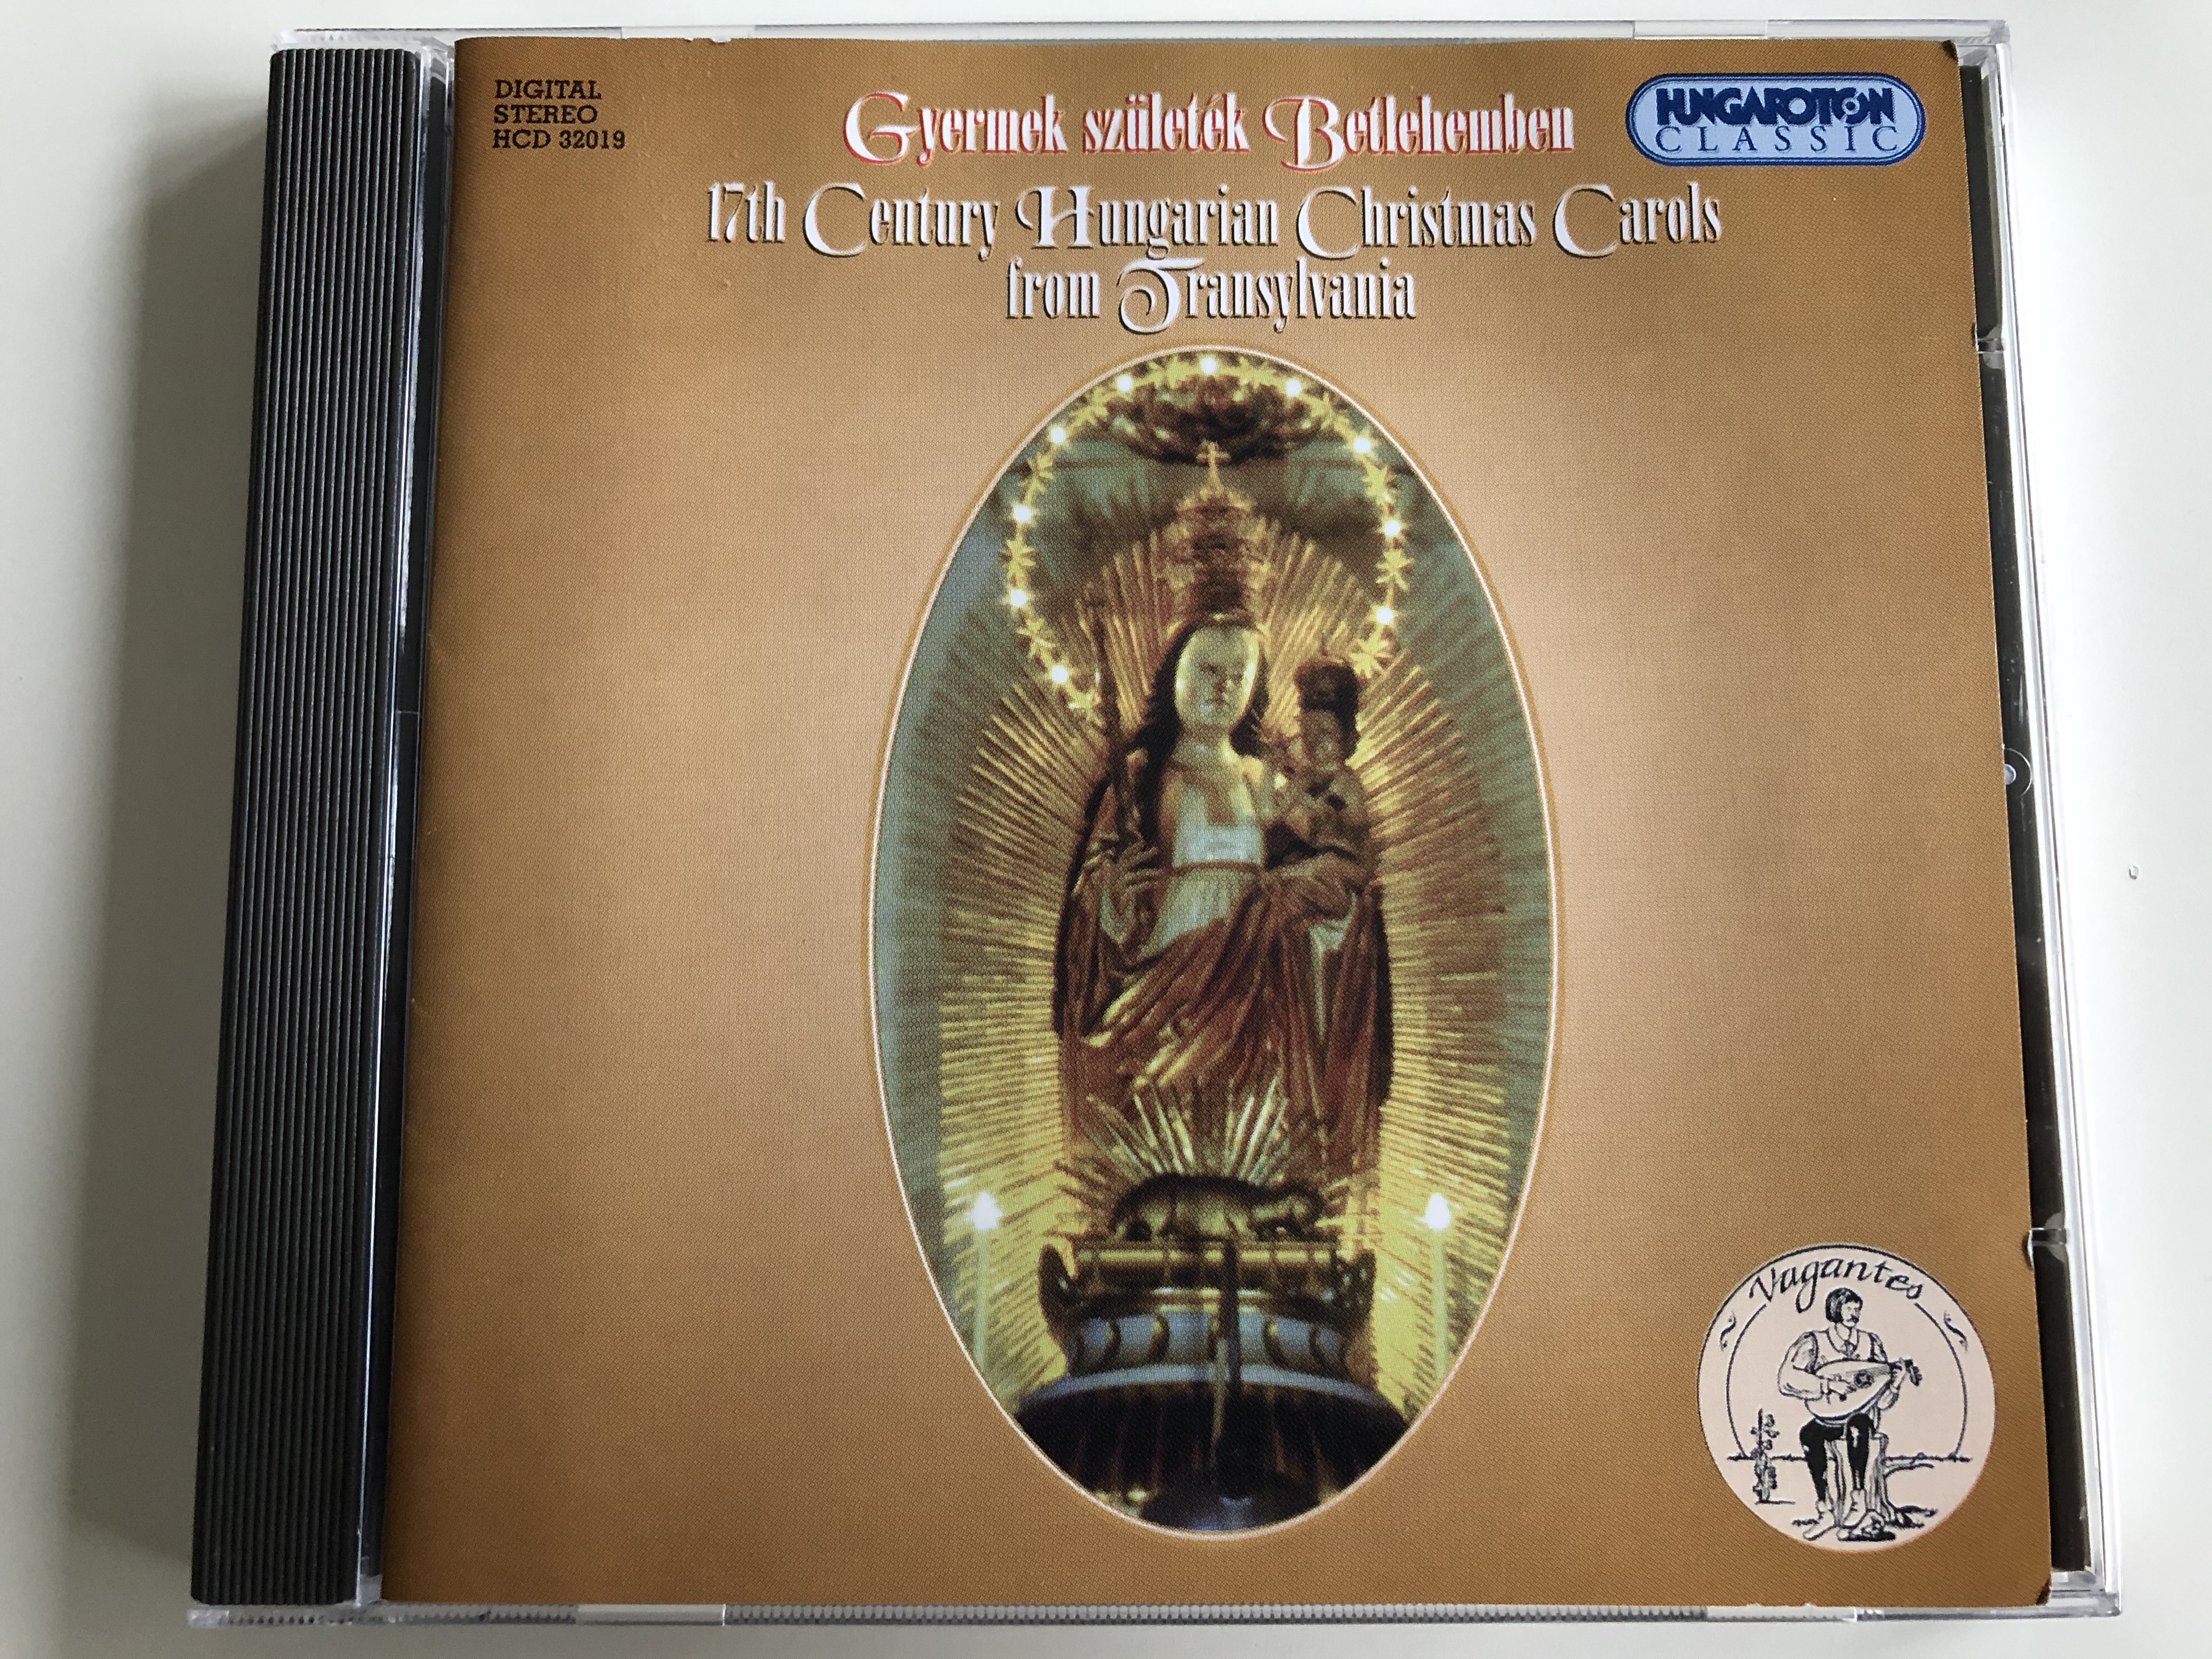 gyermek-sz-let-k-betlehemben-17th-century-hungarian-christmas-carols-from-transylvania-hungaroton-classic-audio-cd-2000-stereo-hcd-32019-1-.jpg